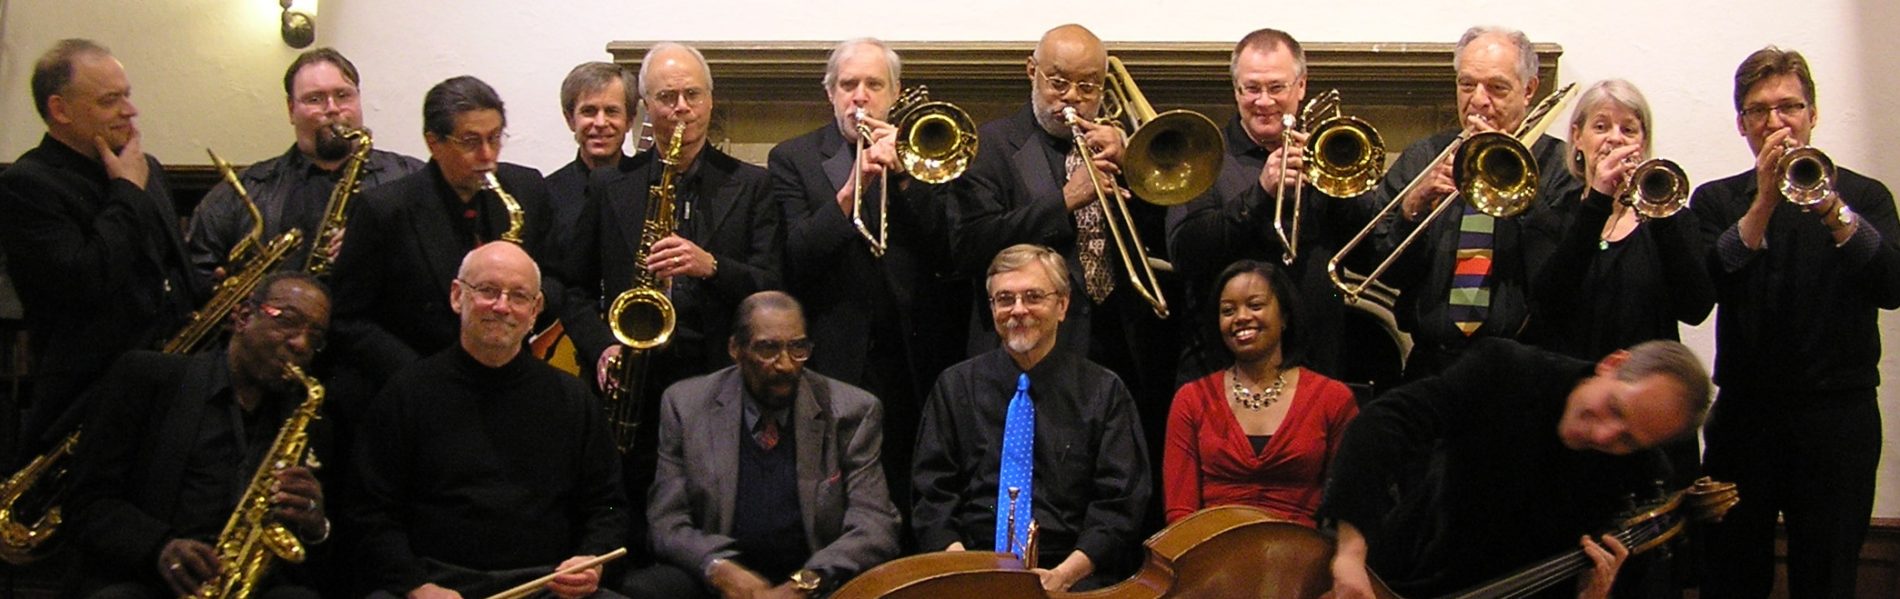 The Aardvark Jazz Orchestra, since 1972